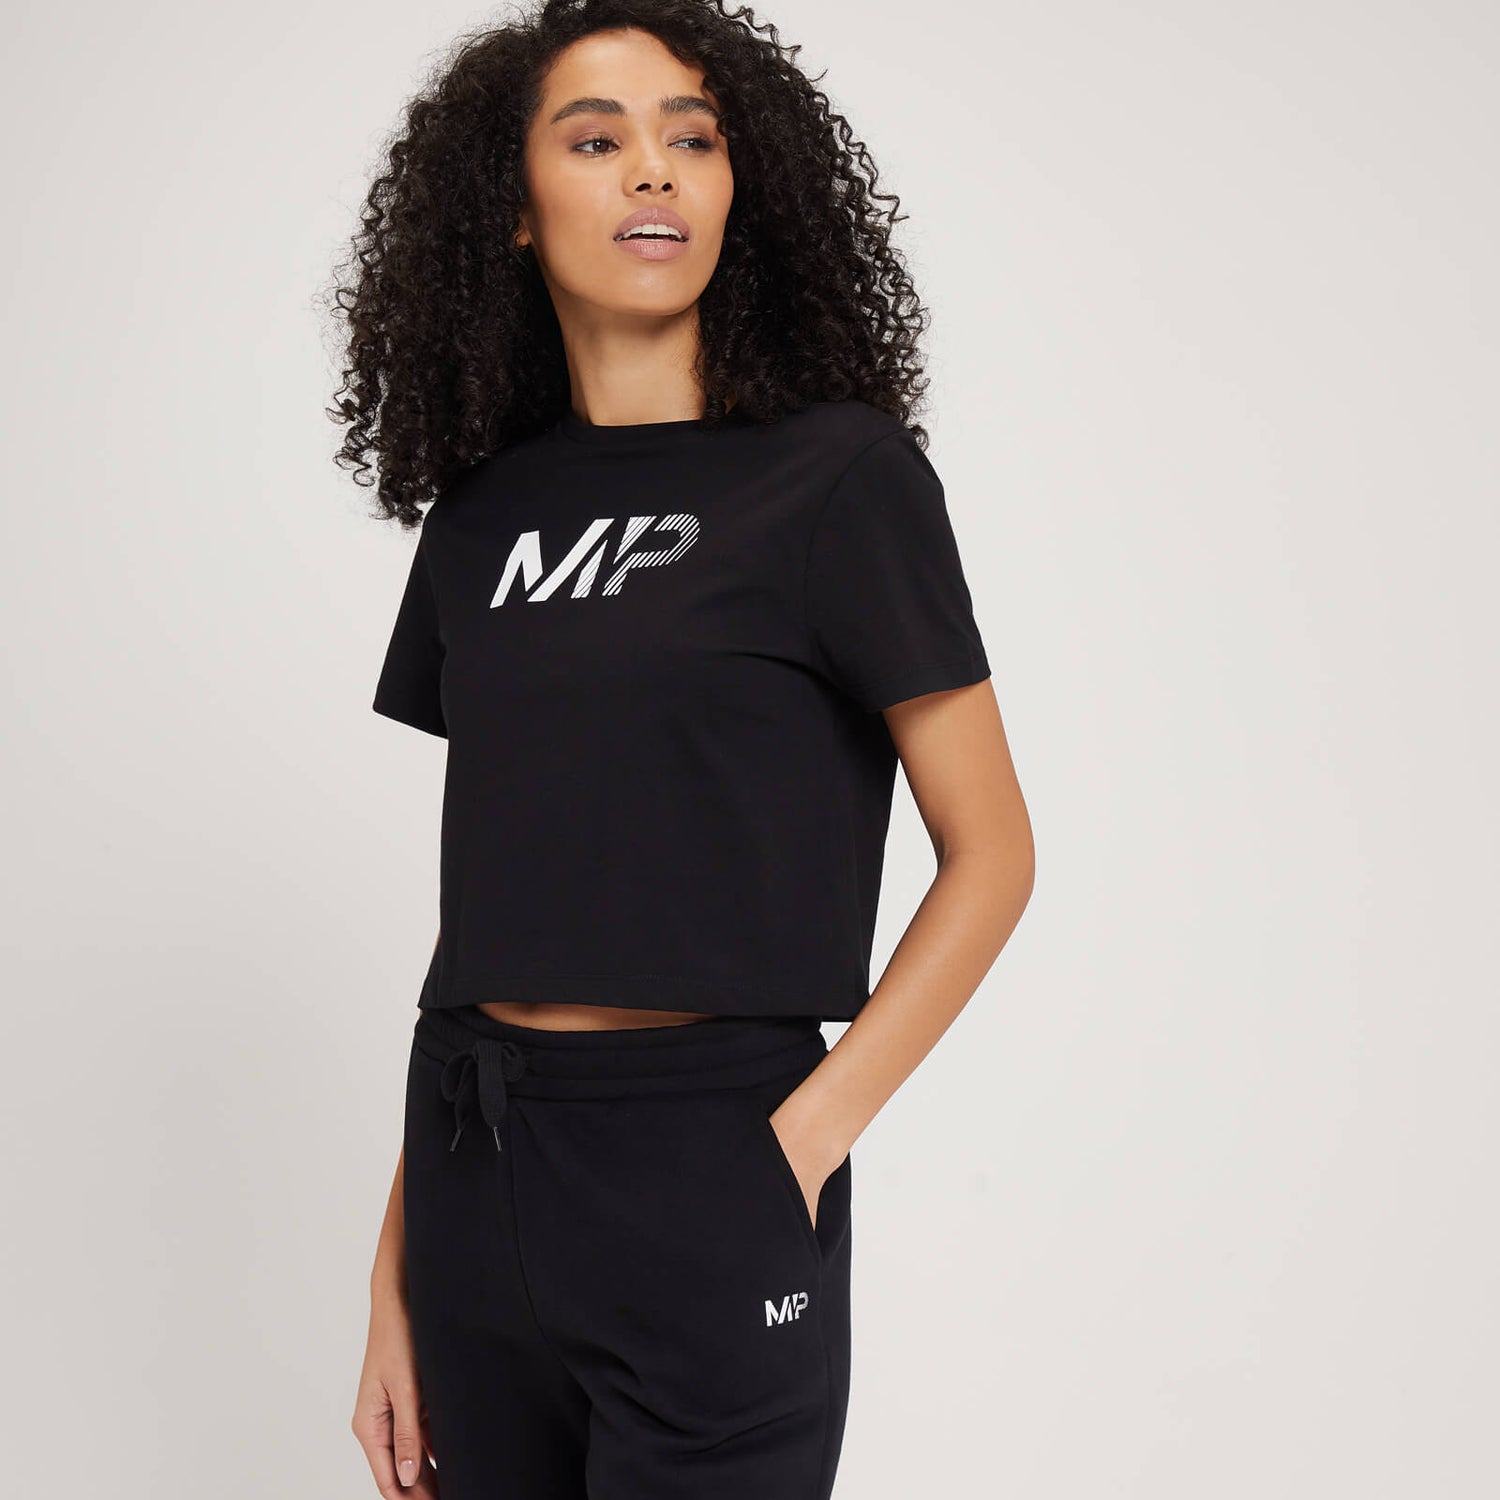 MP Fade Graphic褪色图案系列女士短T恤 - 黑色 - XS